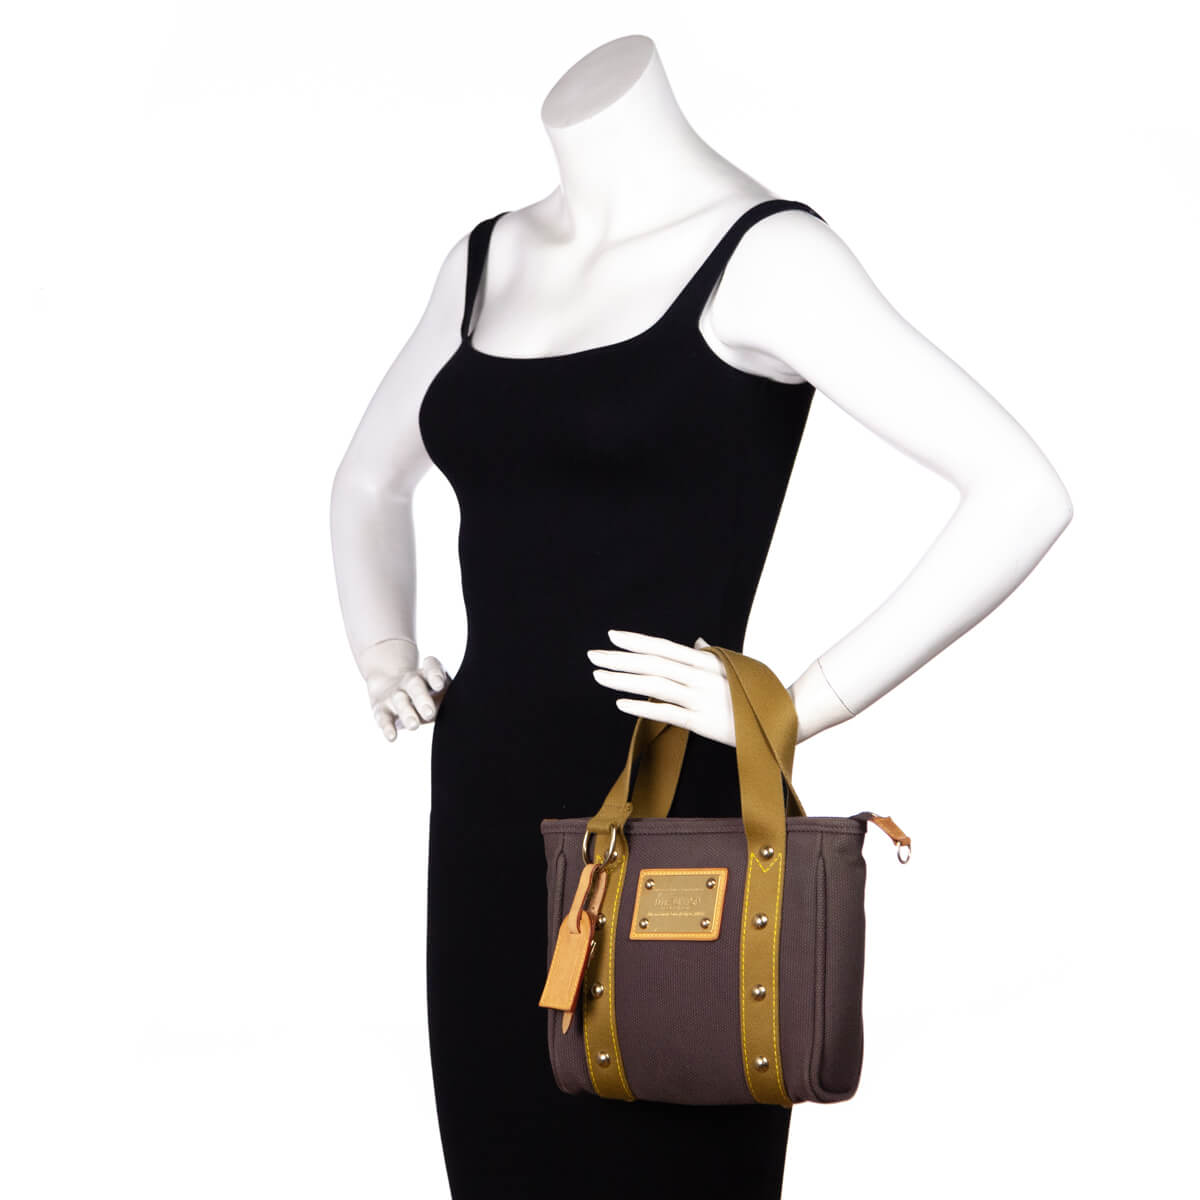 Louis Vuitton Brown/Khaki Toile Cabas Antigua PM - LV Handbags Canada